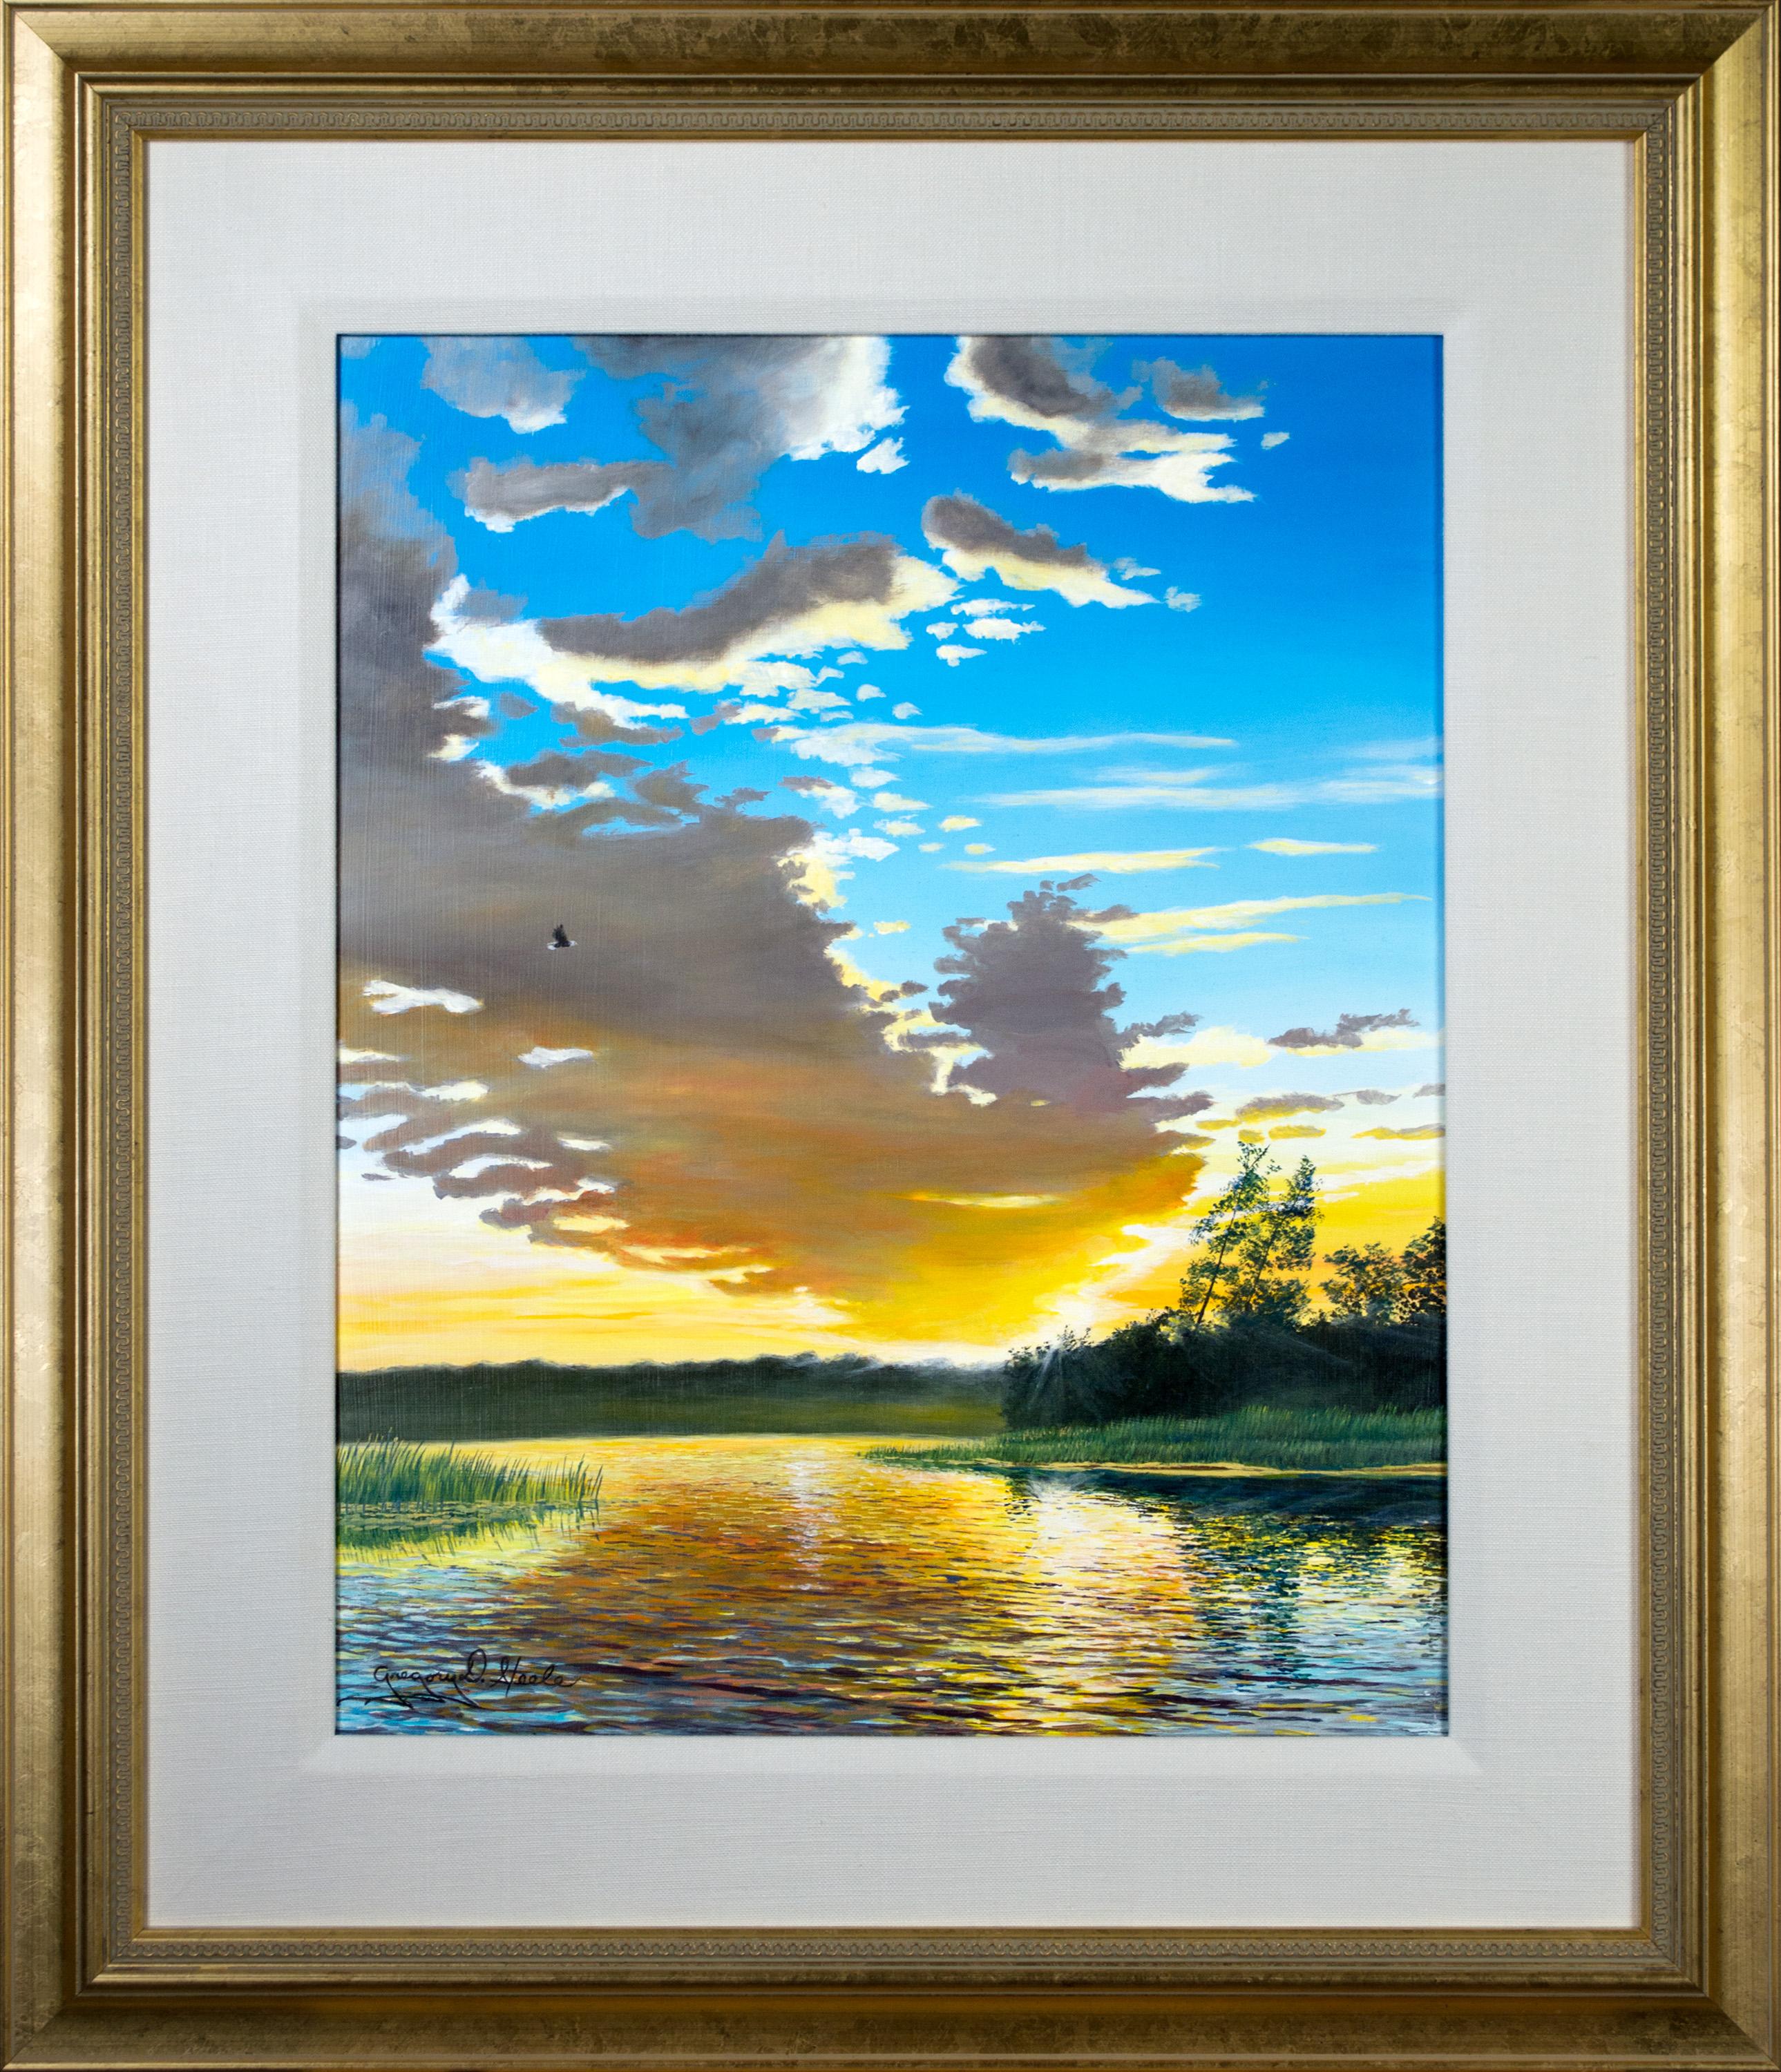 Gregory Steele Landscape Painting - "An Eagle's Morning, " Oil on Board Lake Landscape, Signed